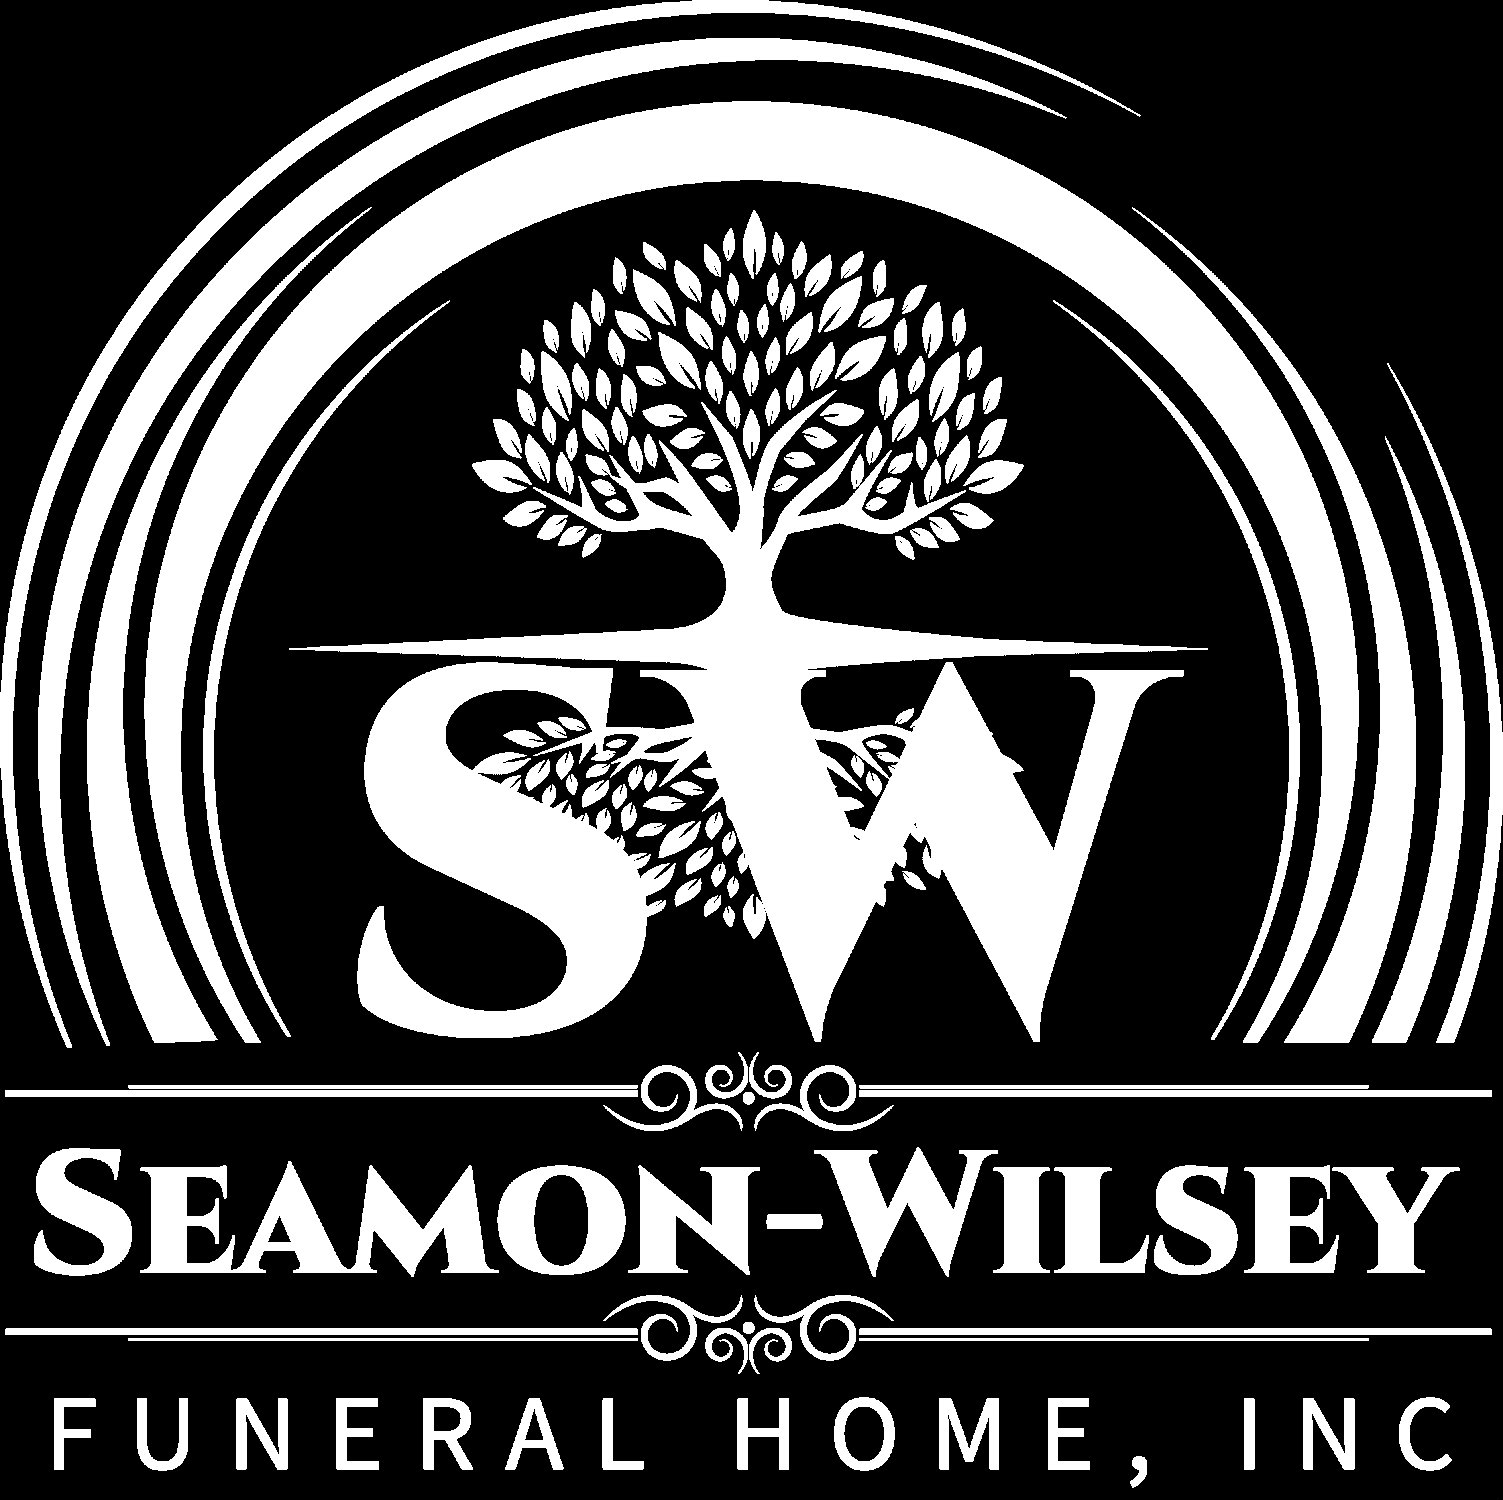 Seamon-Wilsey Funeral Home: Providing Compassionate Services